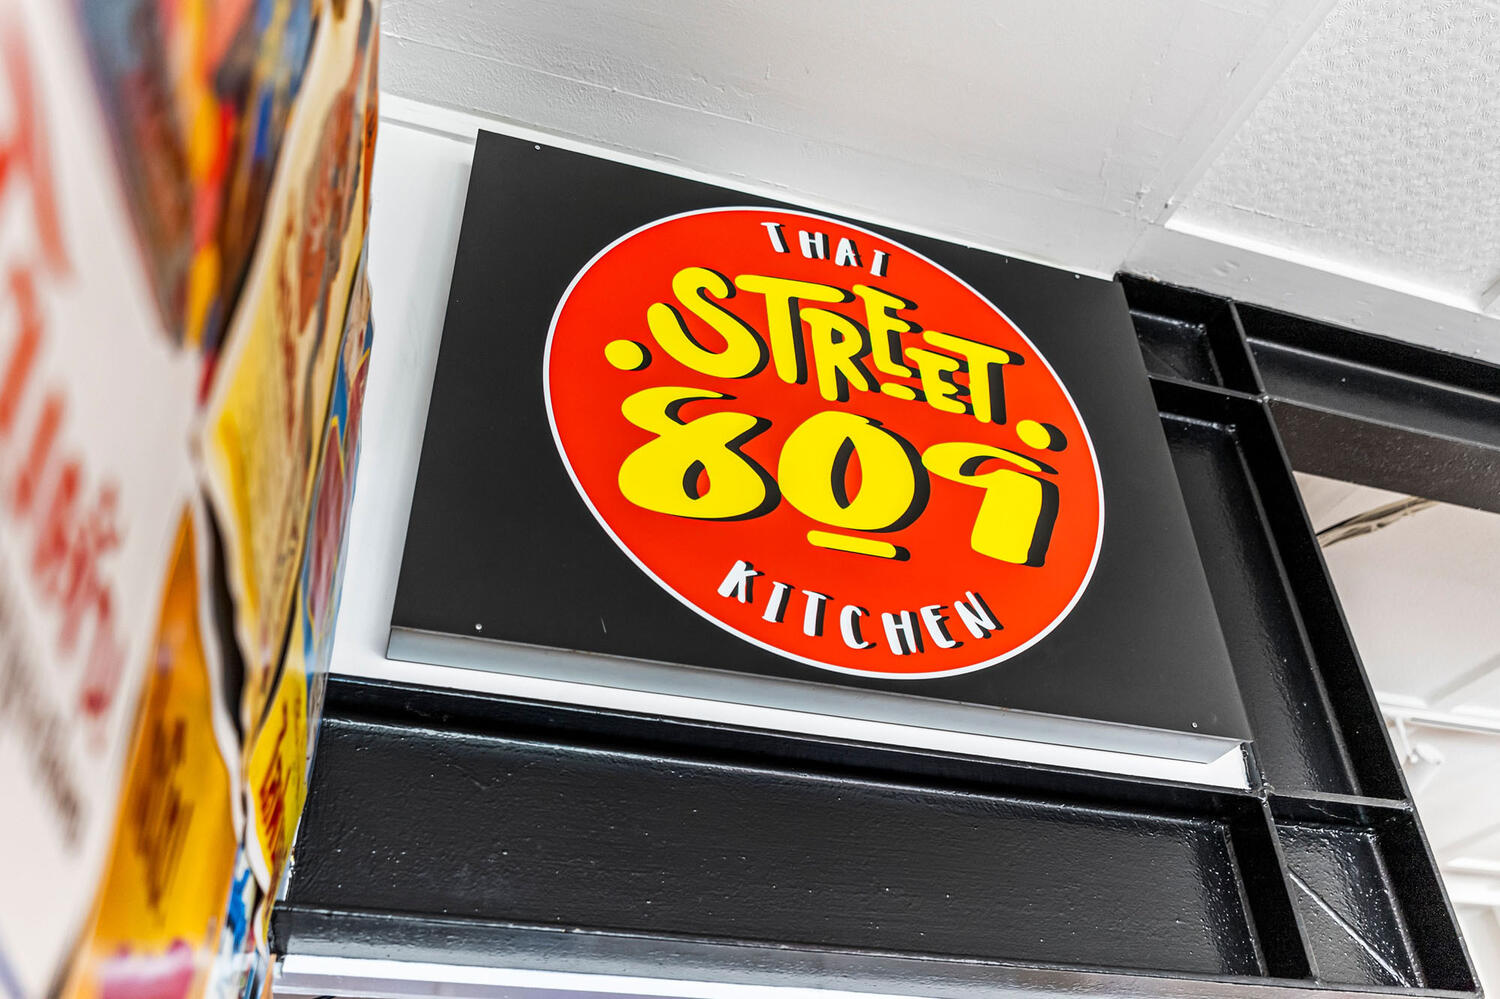 Thai Street809 Web3 Kakapo Business Sales